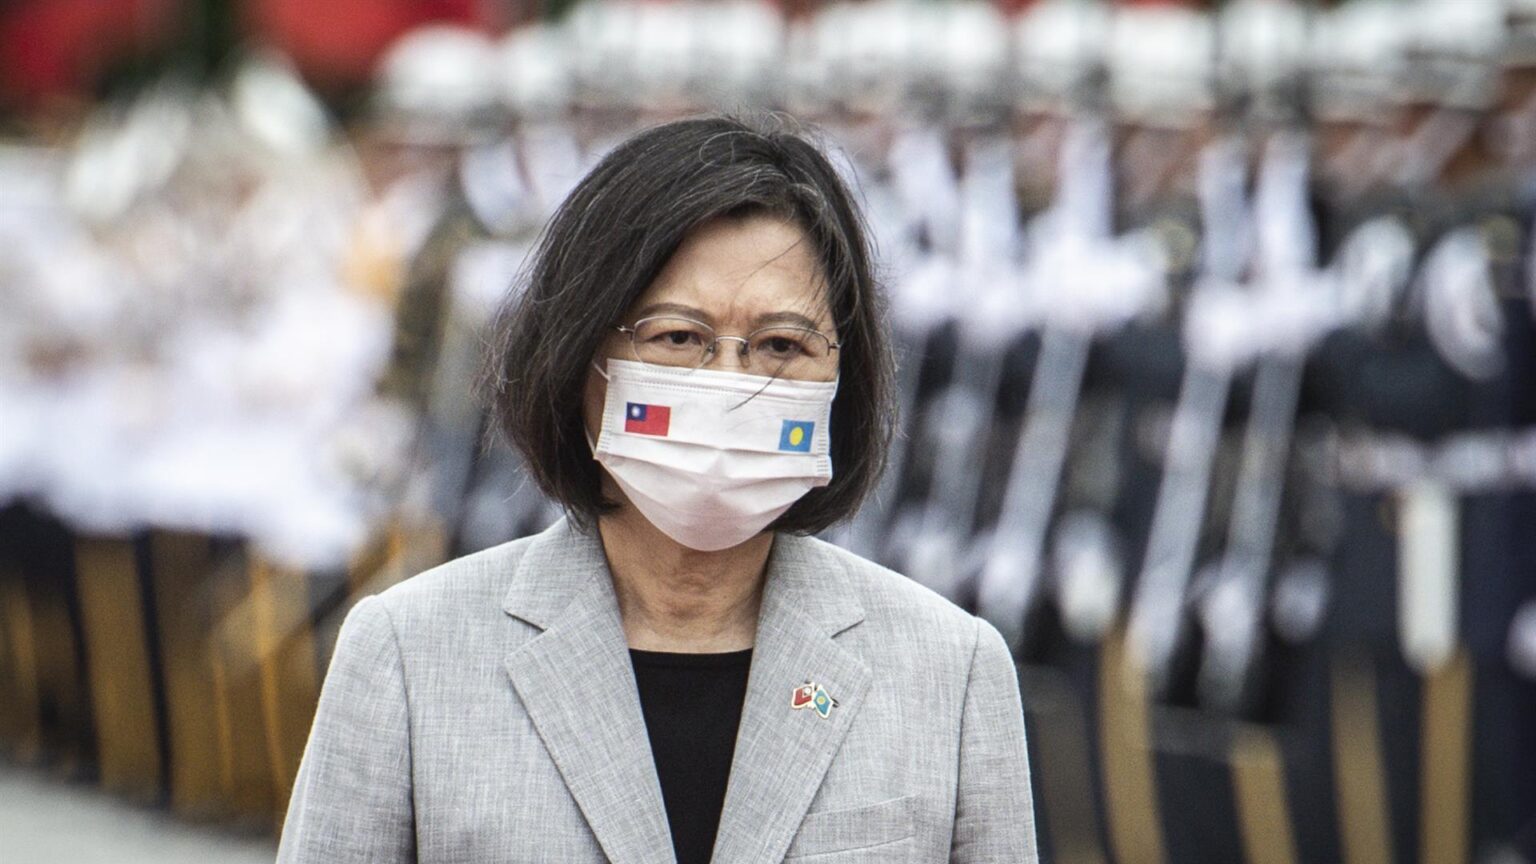 Taiwán anuncia que reforzará sus lazos militares con Estados Unidos